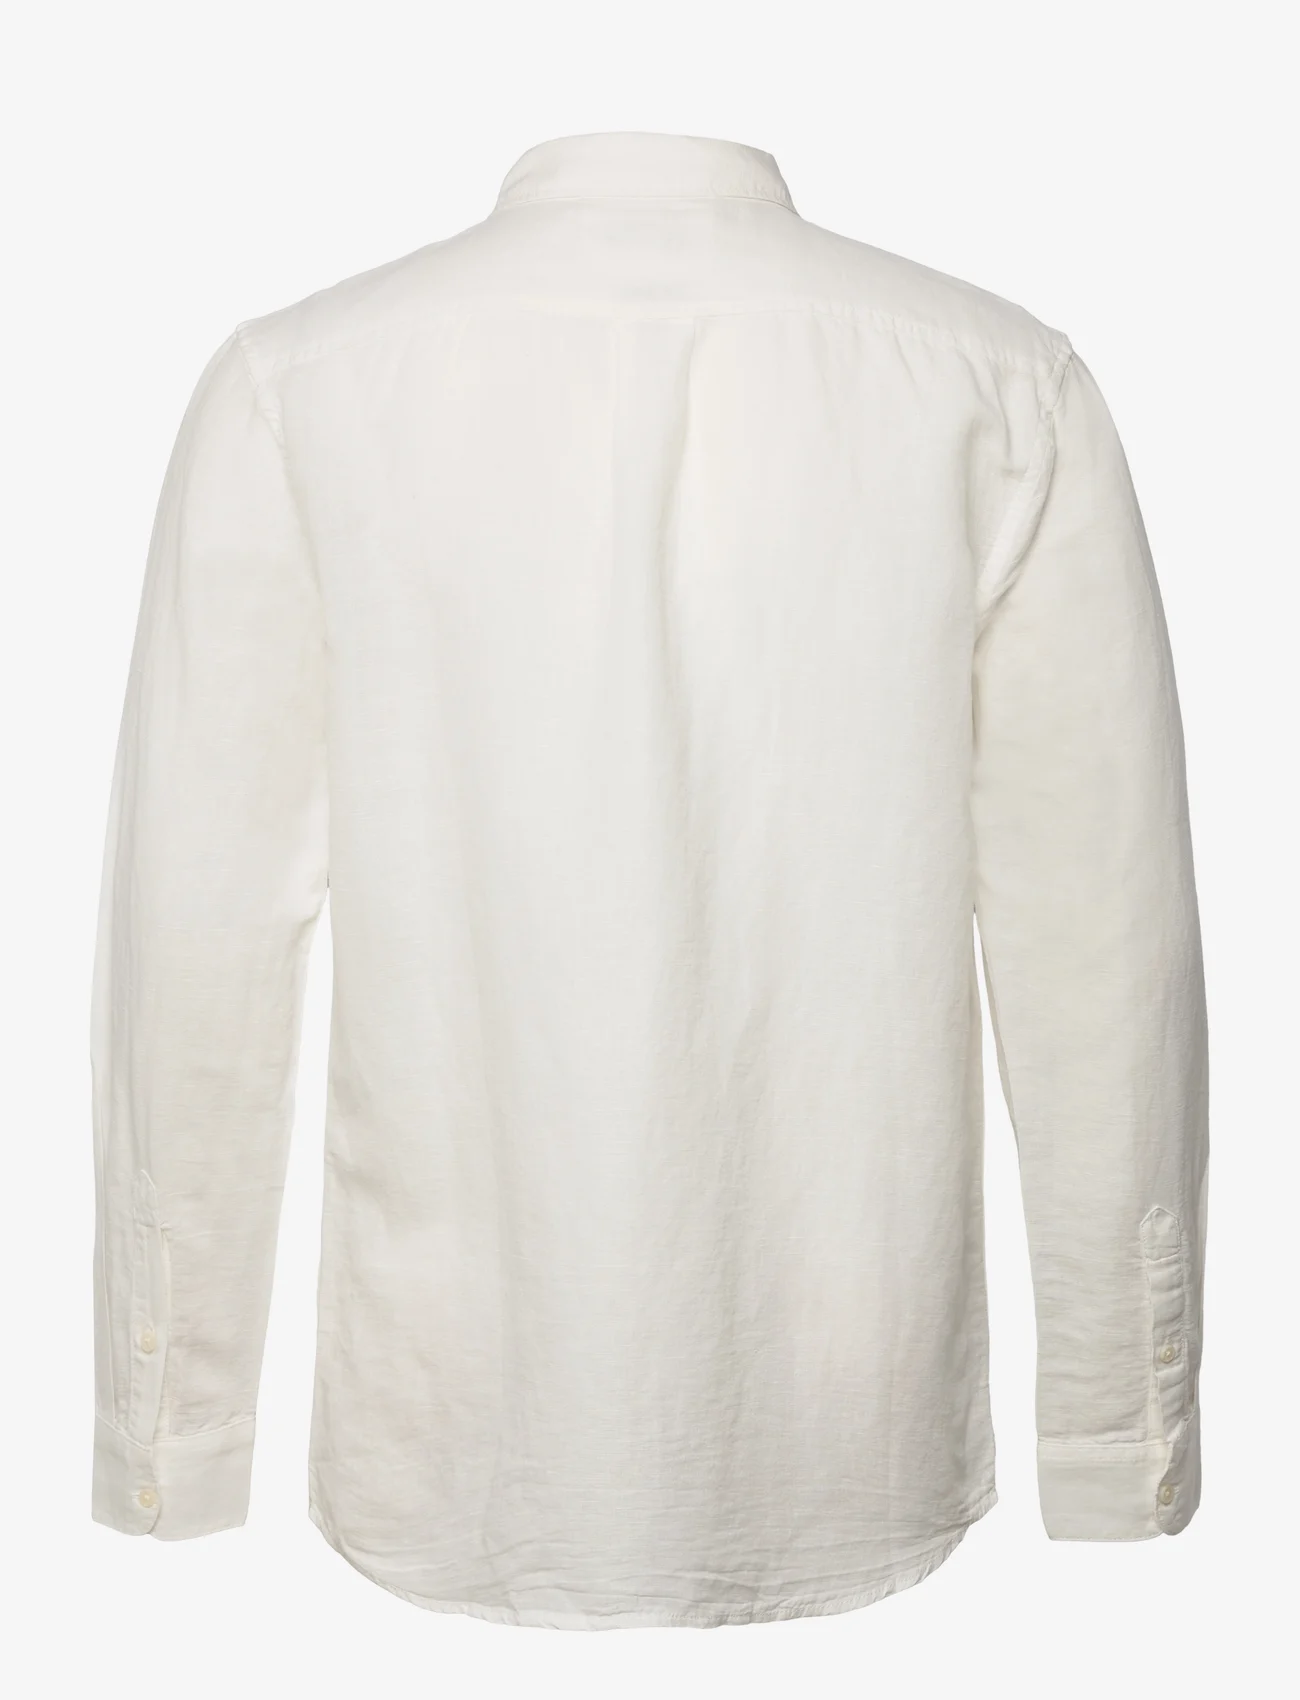 Wrangler - LS 1 PKT SHIRT - linasest riidest särgid - worn white - 1